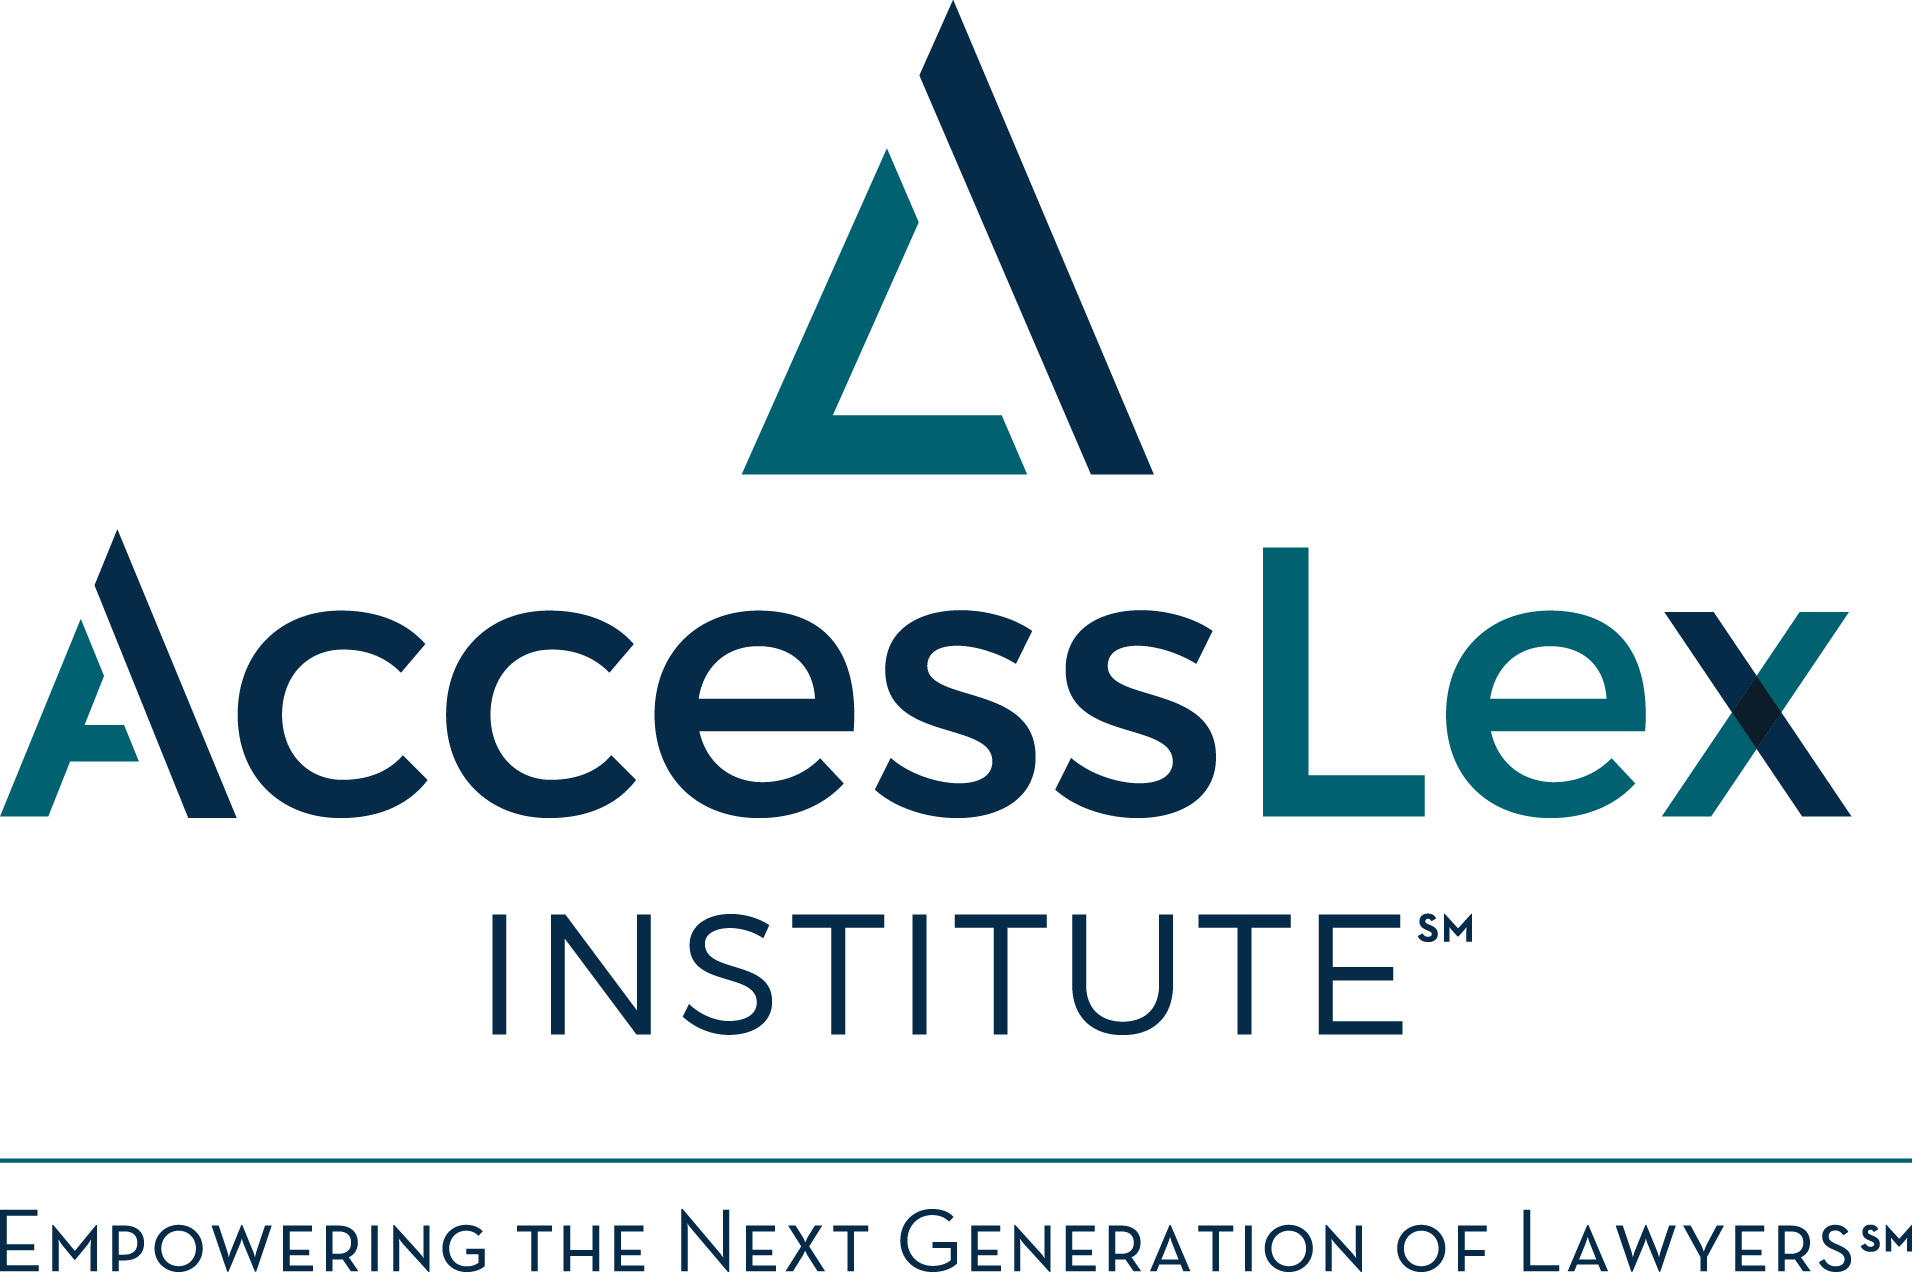 Institute Logo - Guide to Using the AccessLex Institute Name and Logo